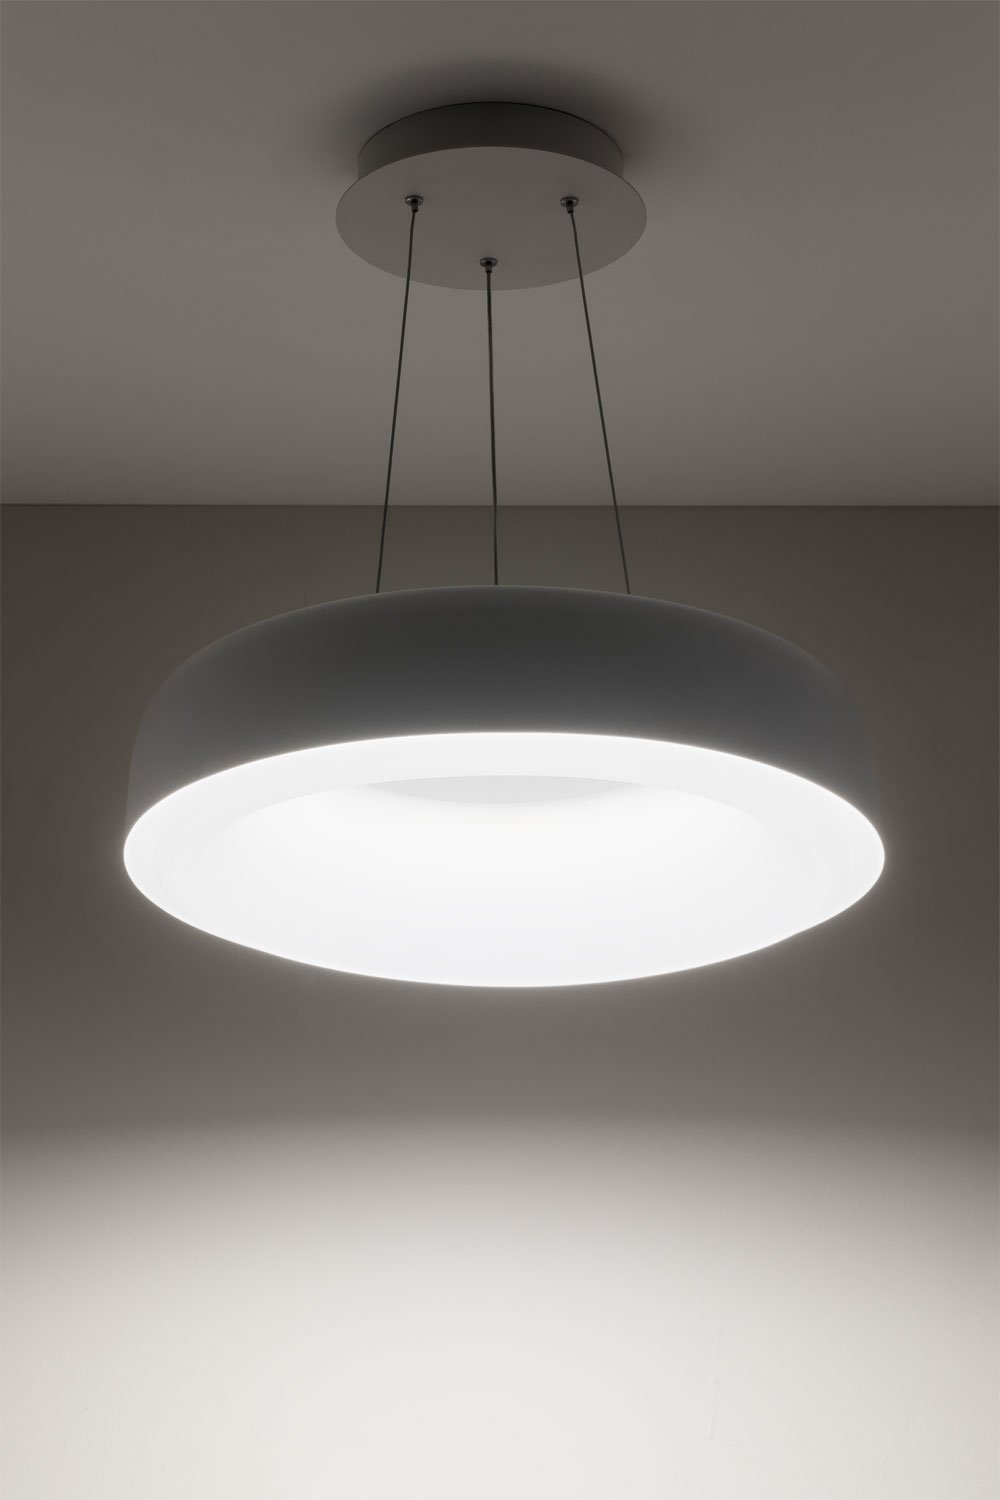 Metalowa lampa sufitowa LED Ramize , obrazek w galerii 2